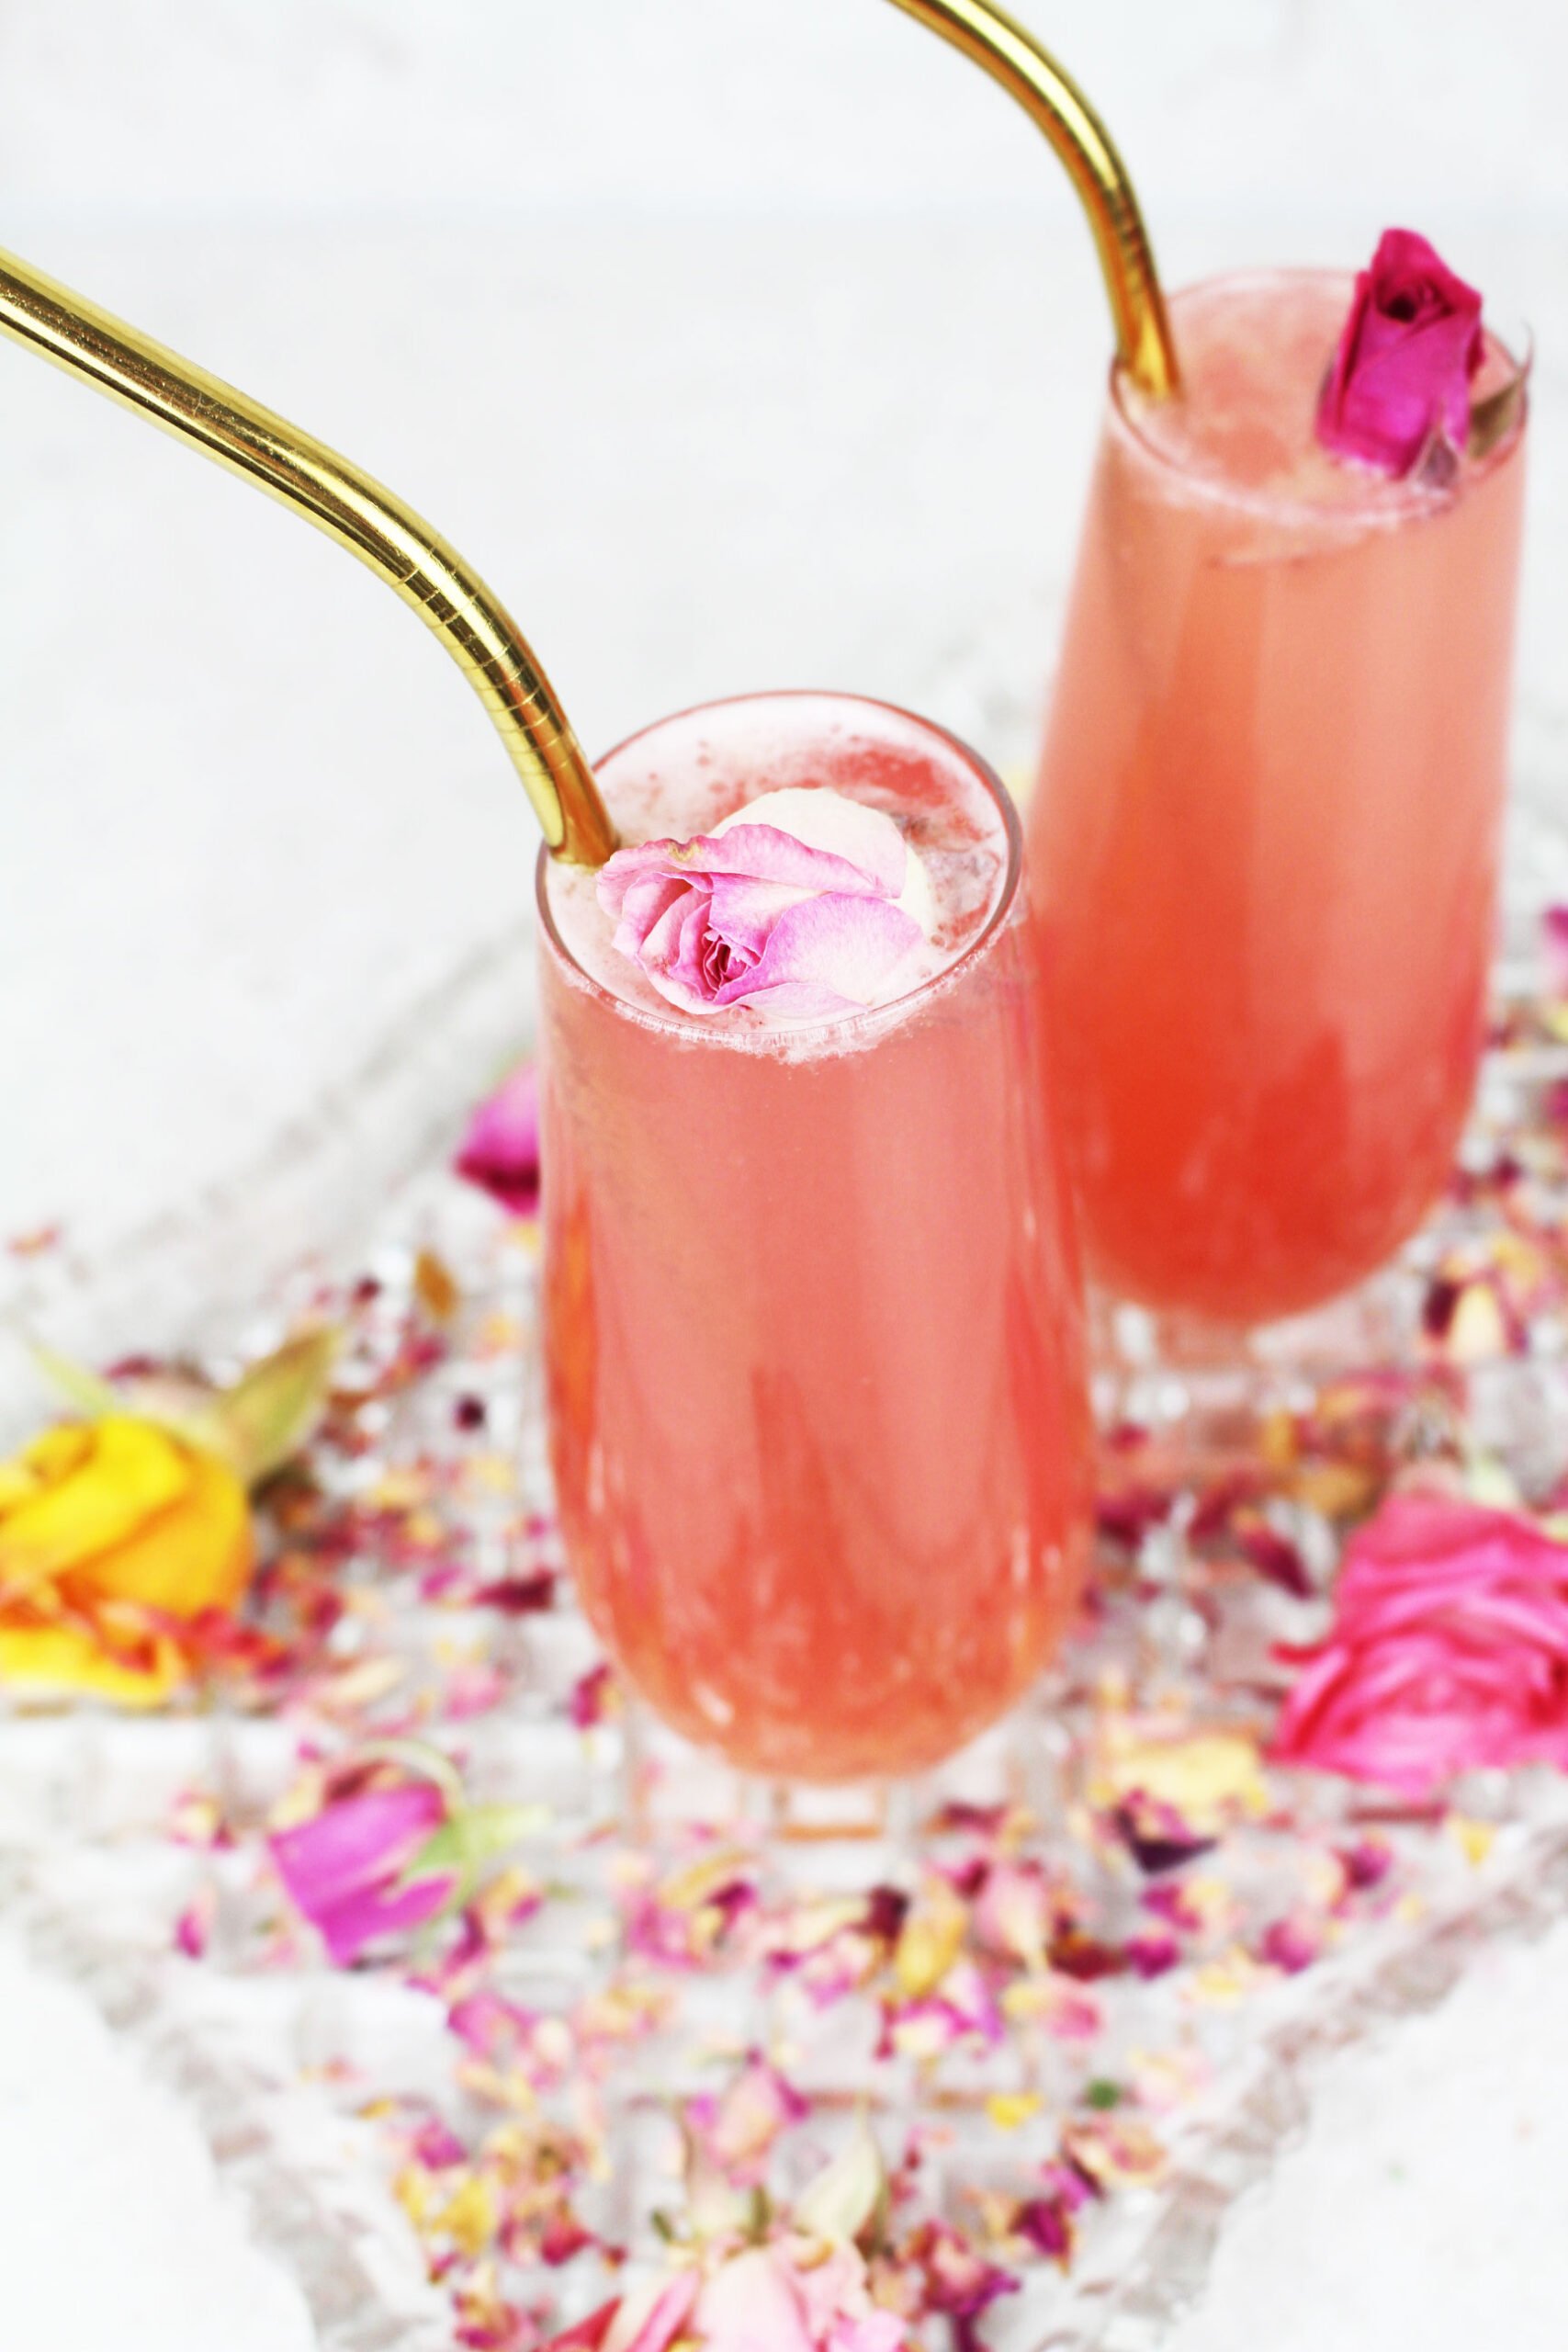 Rose Petal recipe ingredients - How to make a Rose Petal cocktail